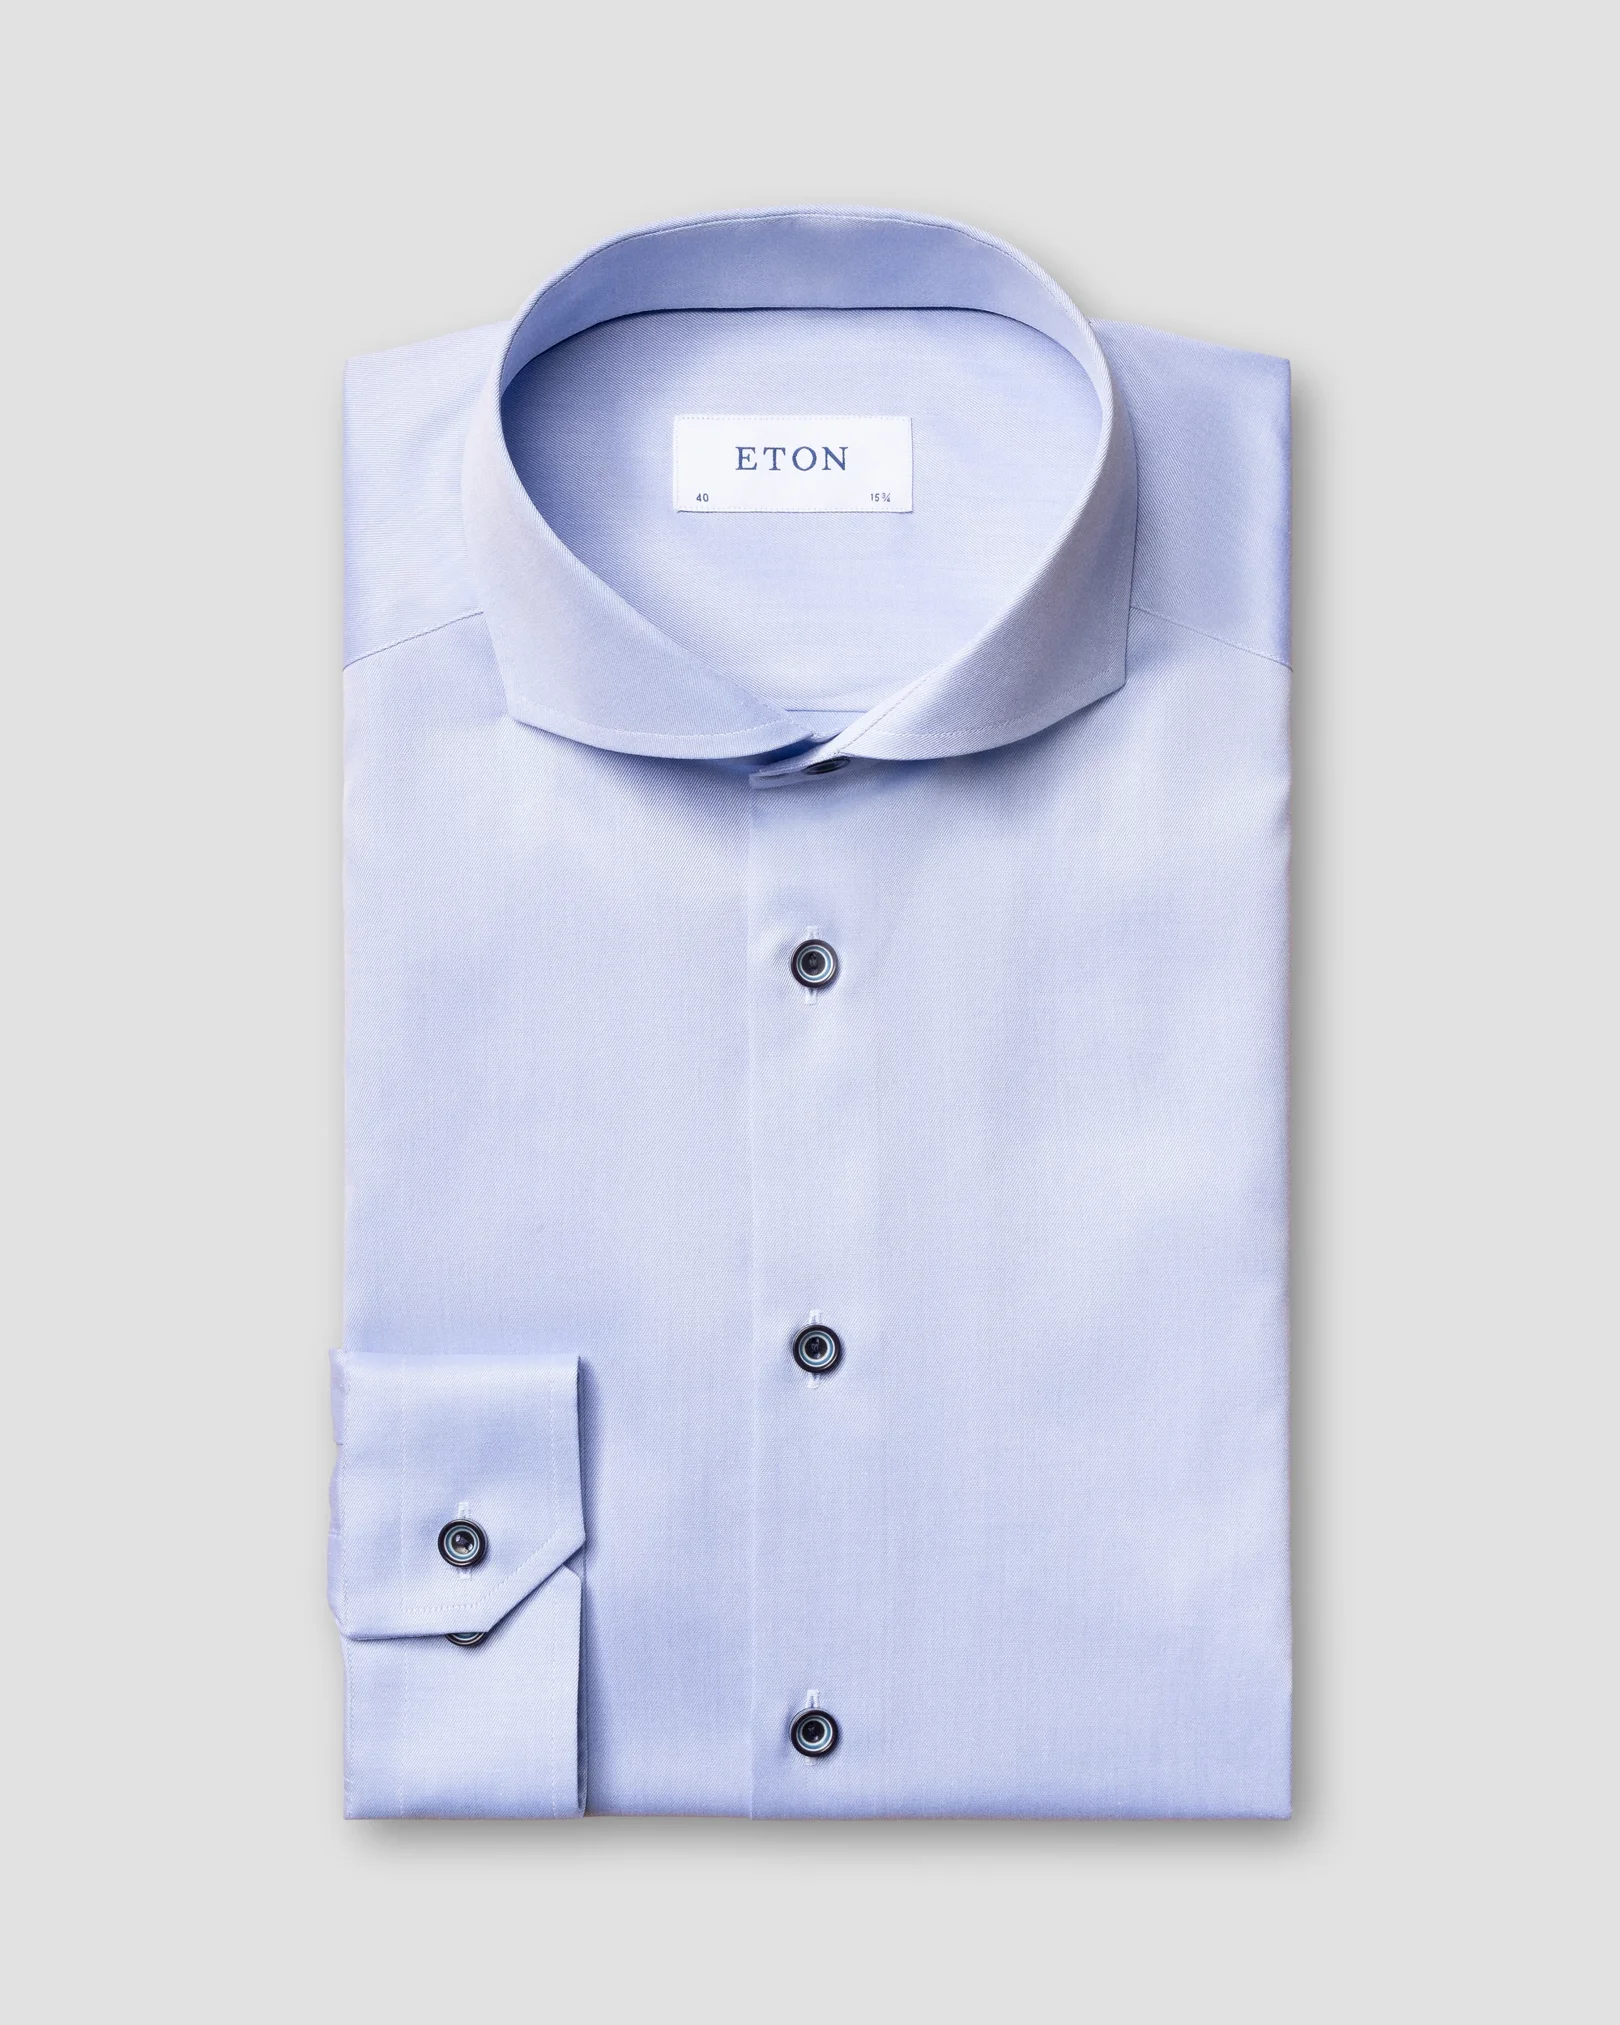 Eton - blue twill shirt navy buttons extreme cut away